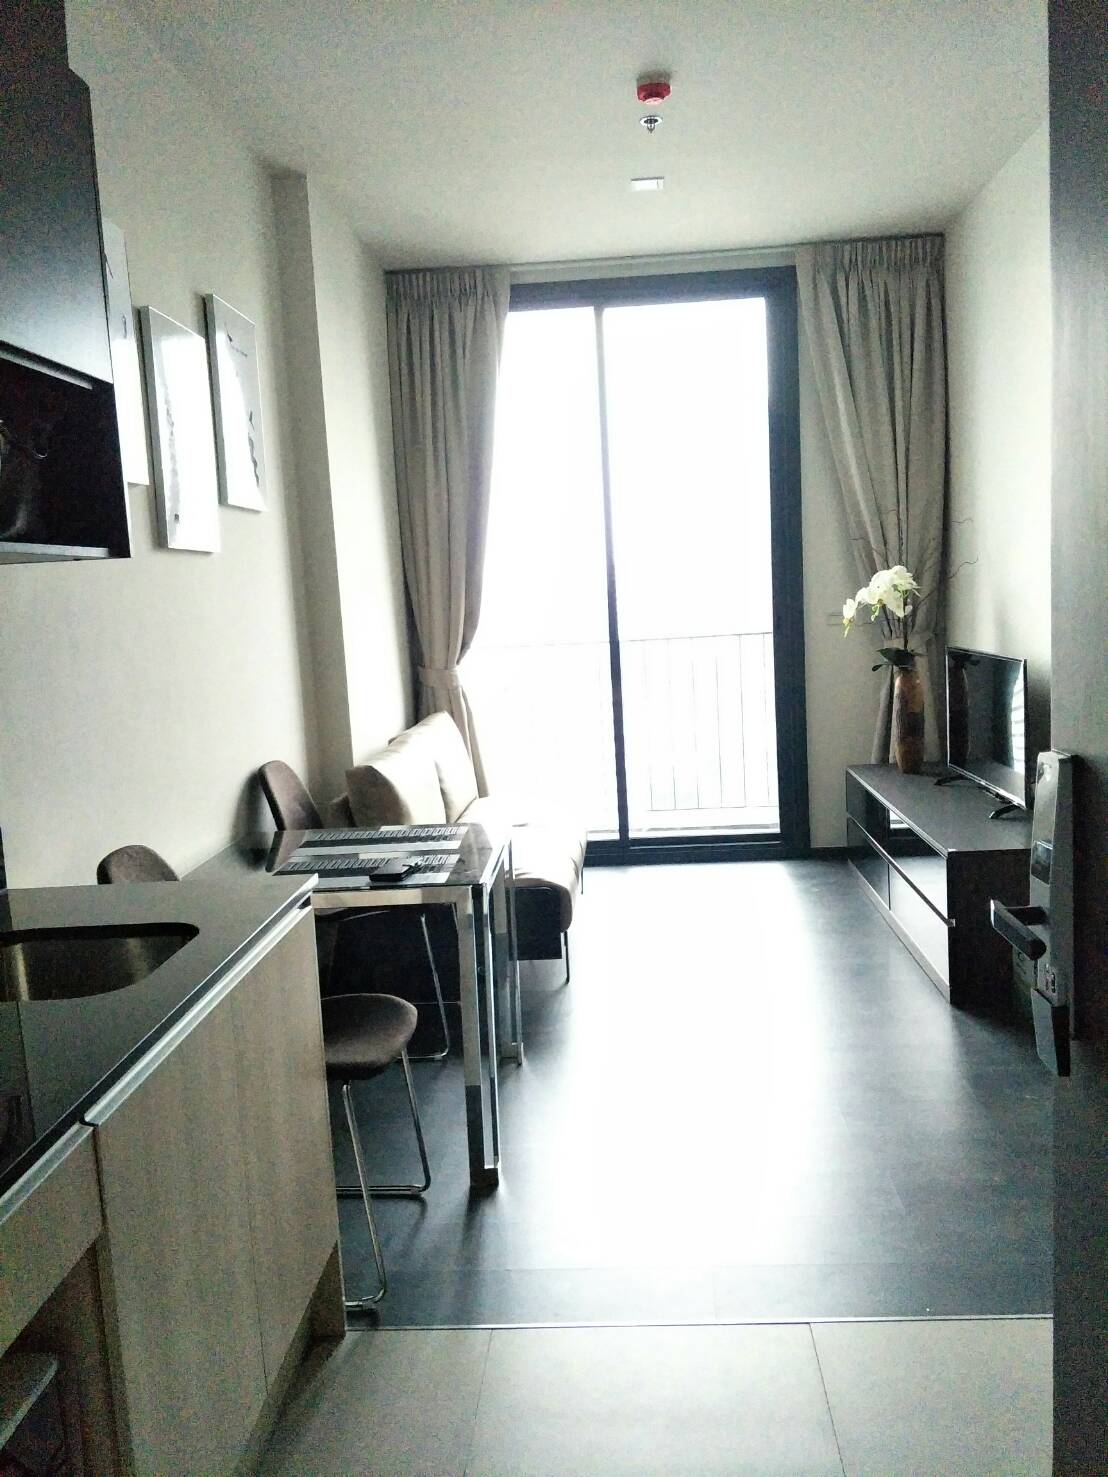 Apartment for sale near Sukhumvit MRT - 1-bedroom - mid-floor - Edge Sukhumvit 23 Bangkok condo